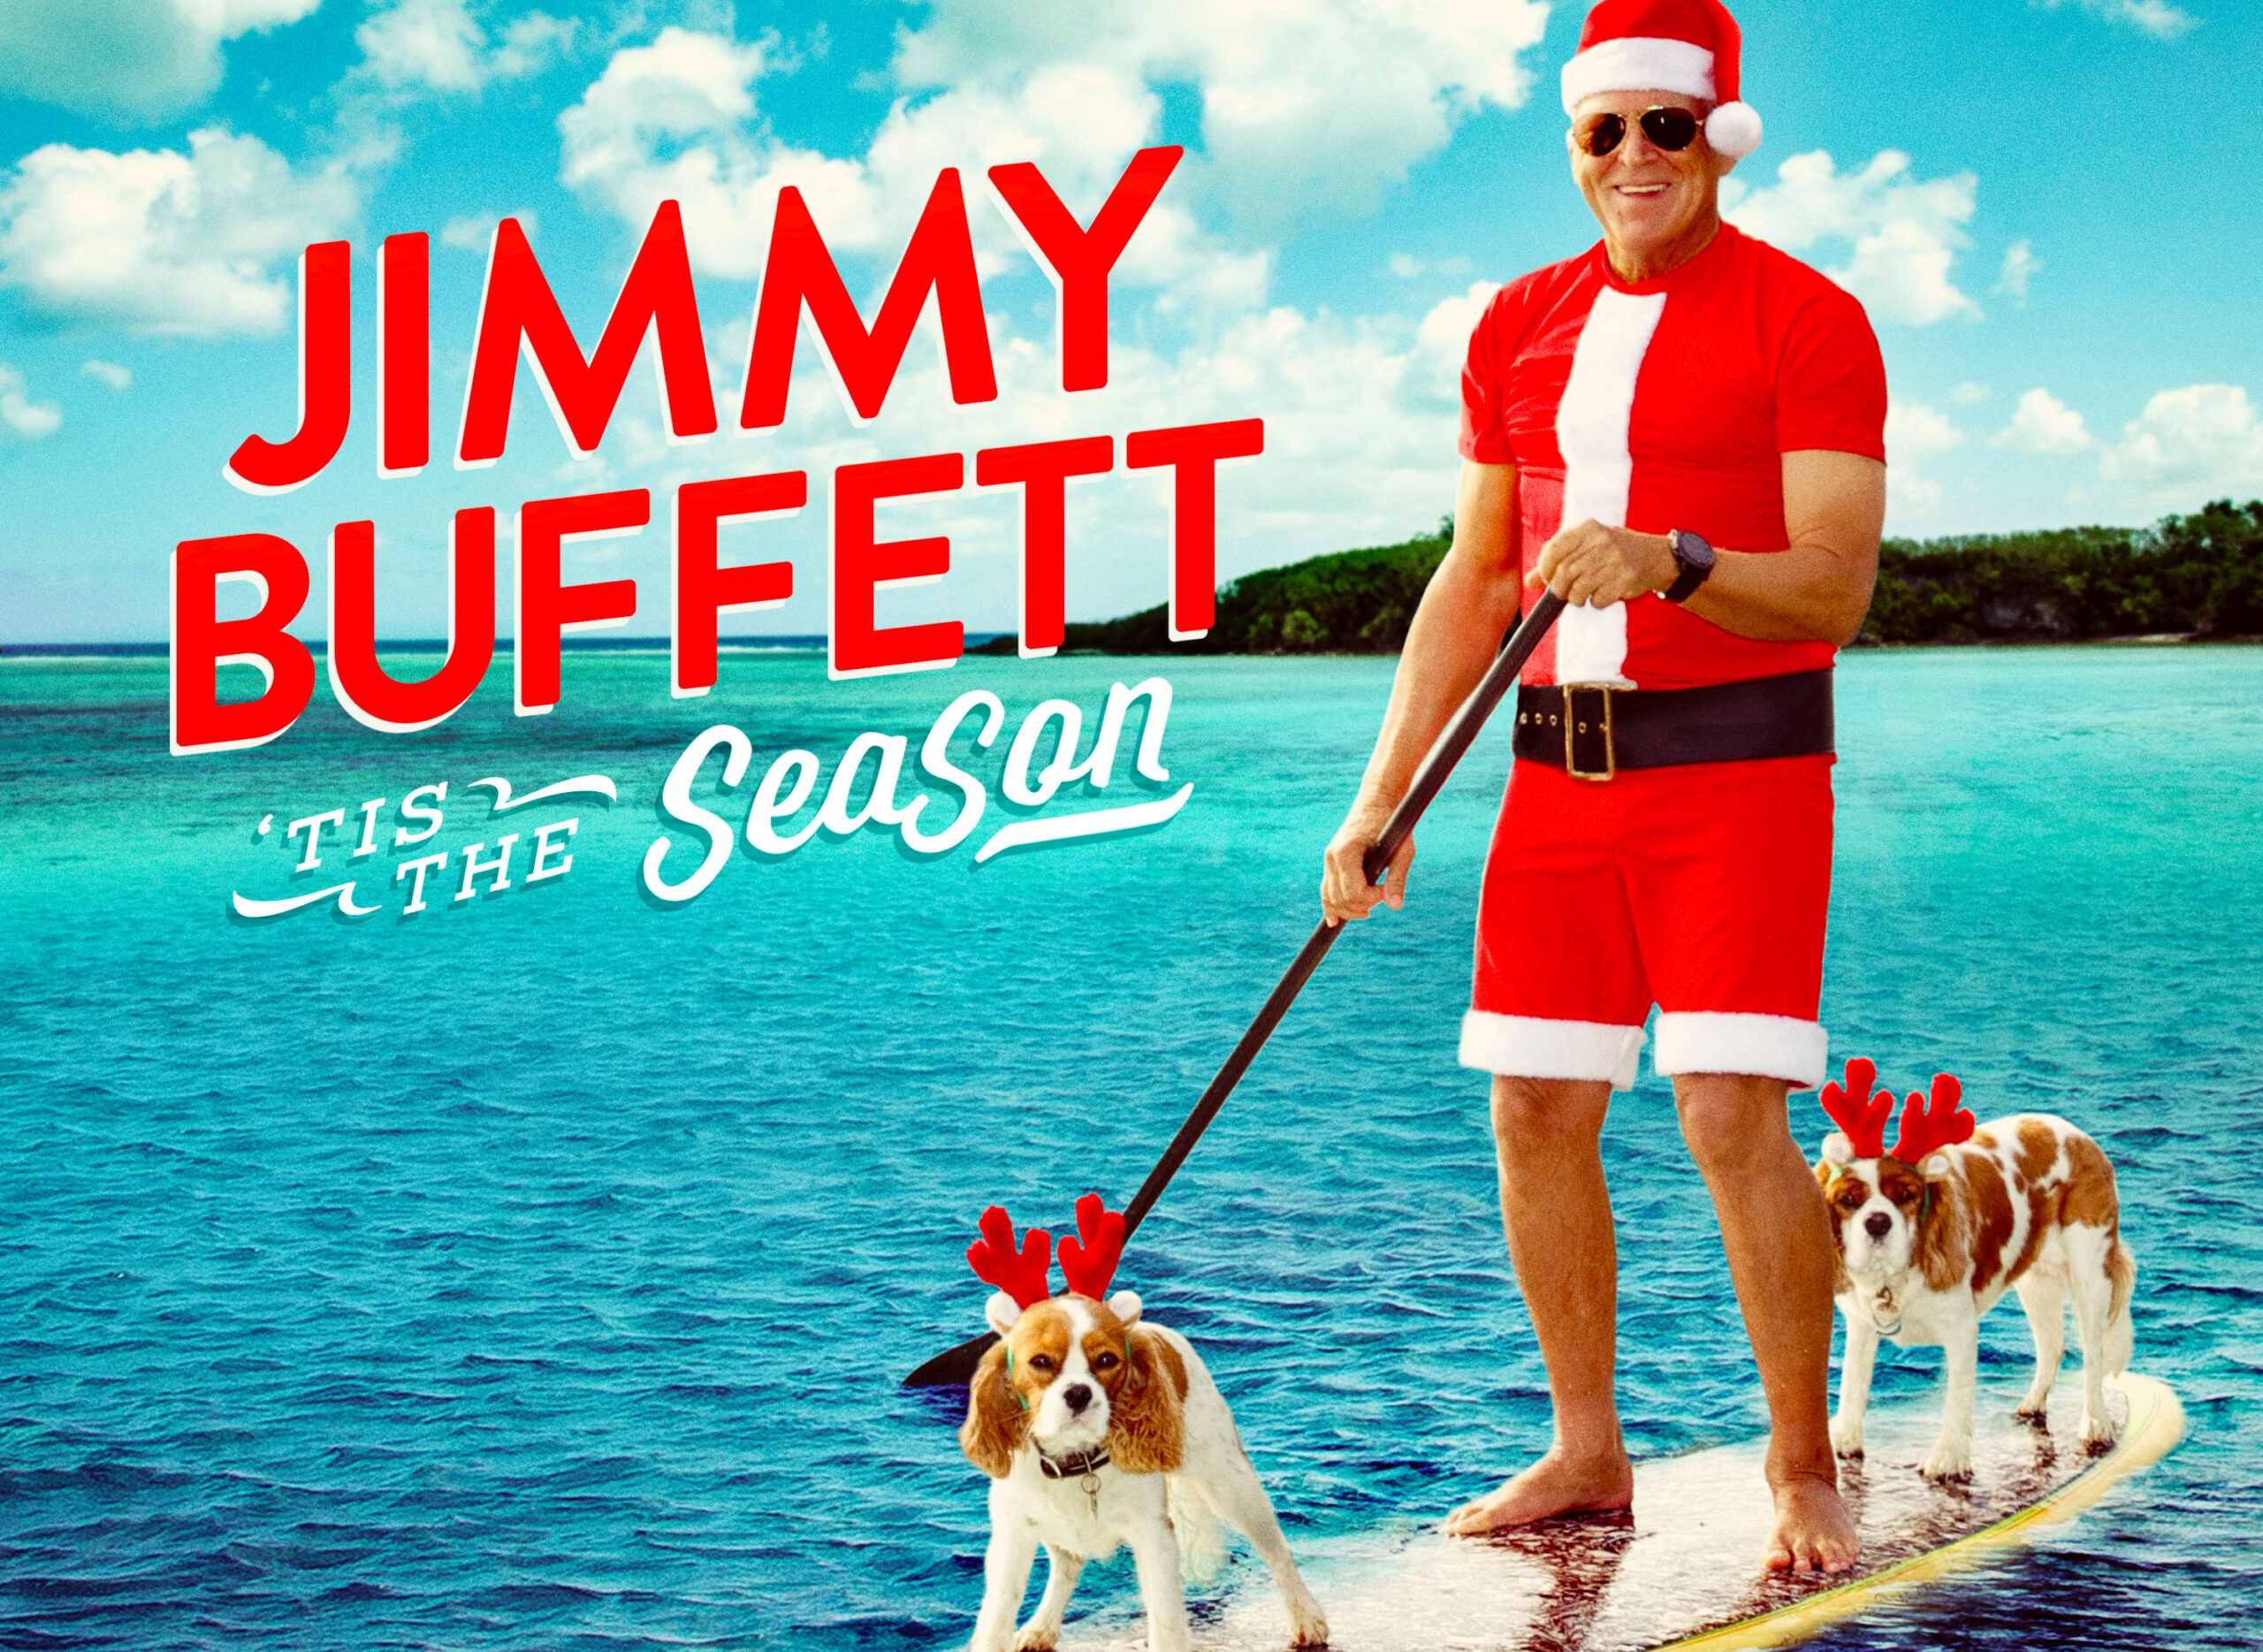 Sintonízanos mañana: ¡Pista 7 Rockin' Around The Christmas Tree del nuevo álbum navideño de Jimmy Buffett!